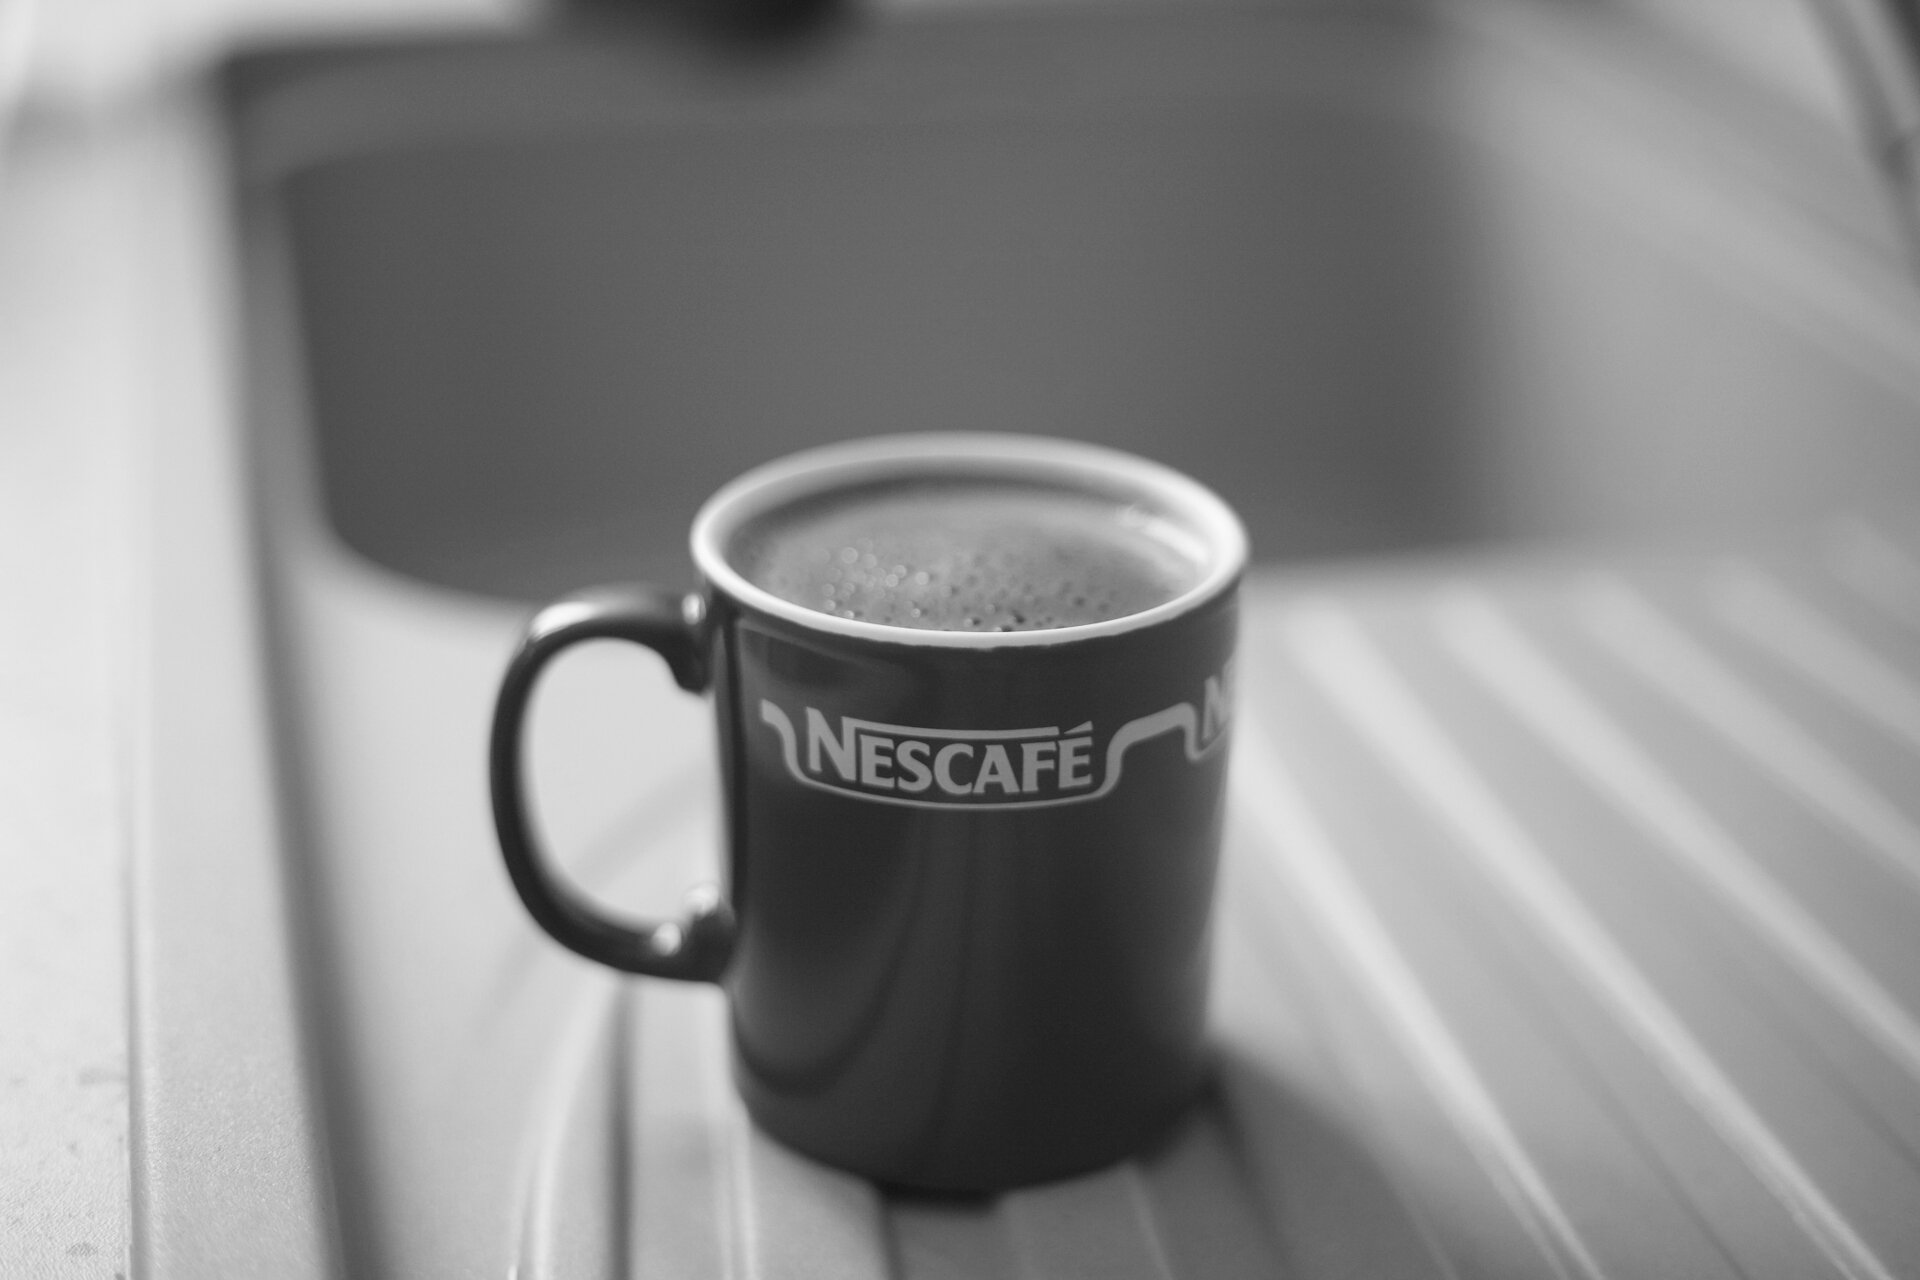 A Nescafe mug sits next to a sink.